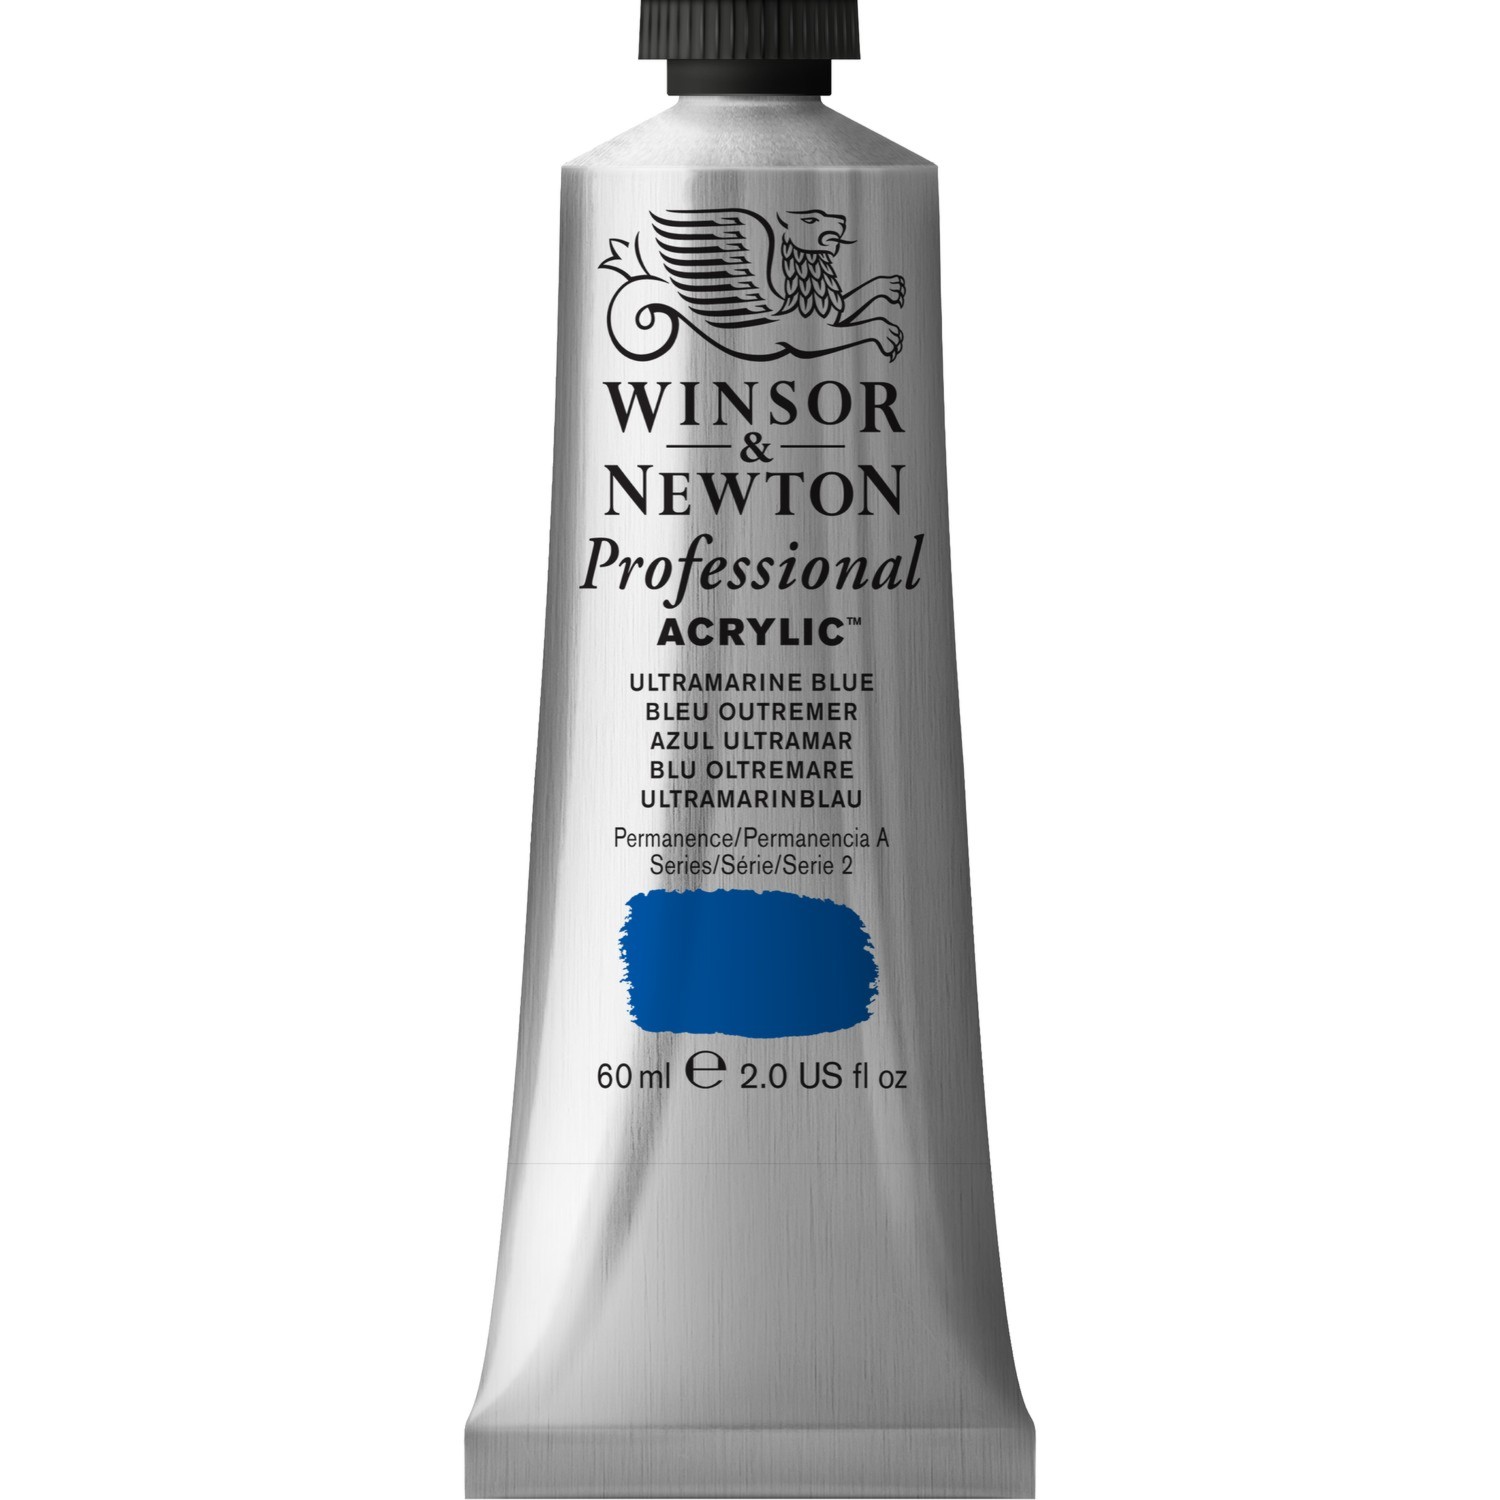 Winsor and Newton 60ml Professional Acrylic Paint - Ultramarine Blue Image 1